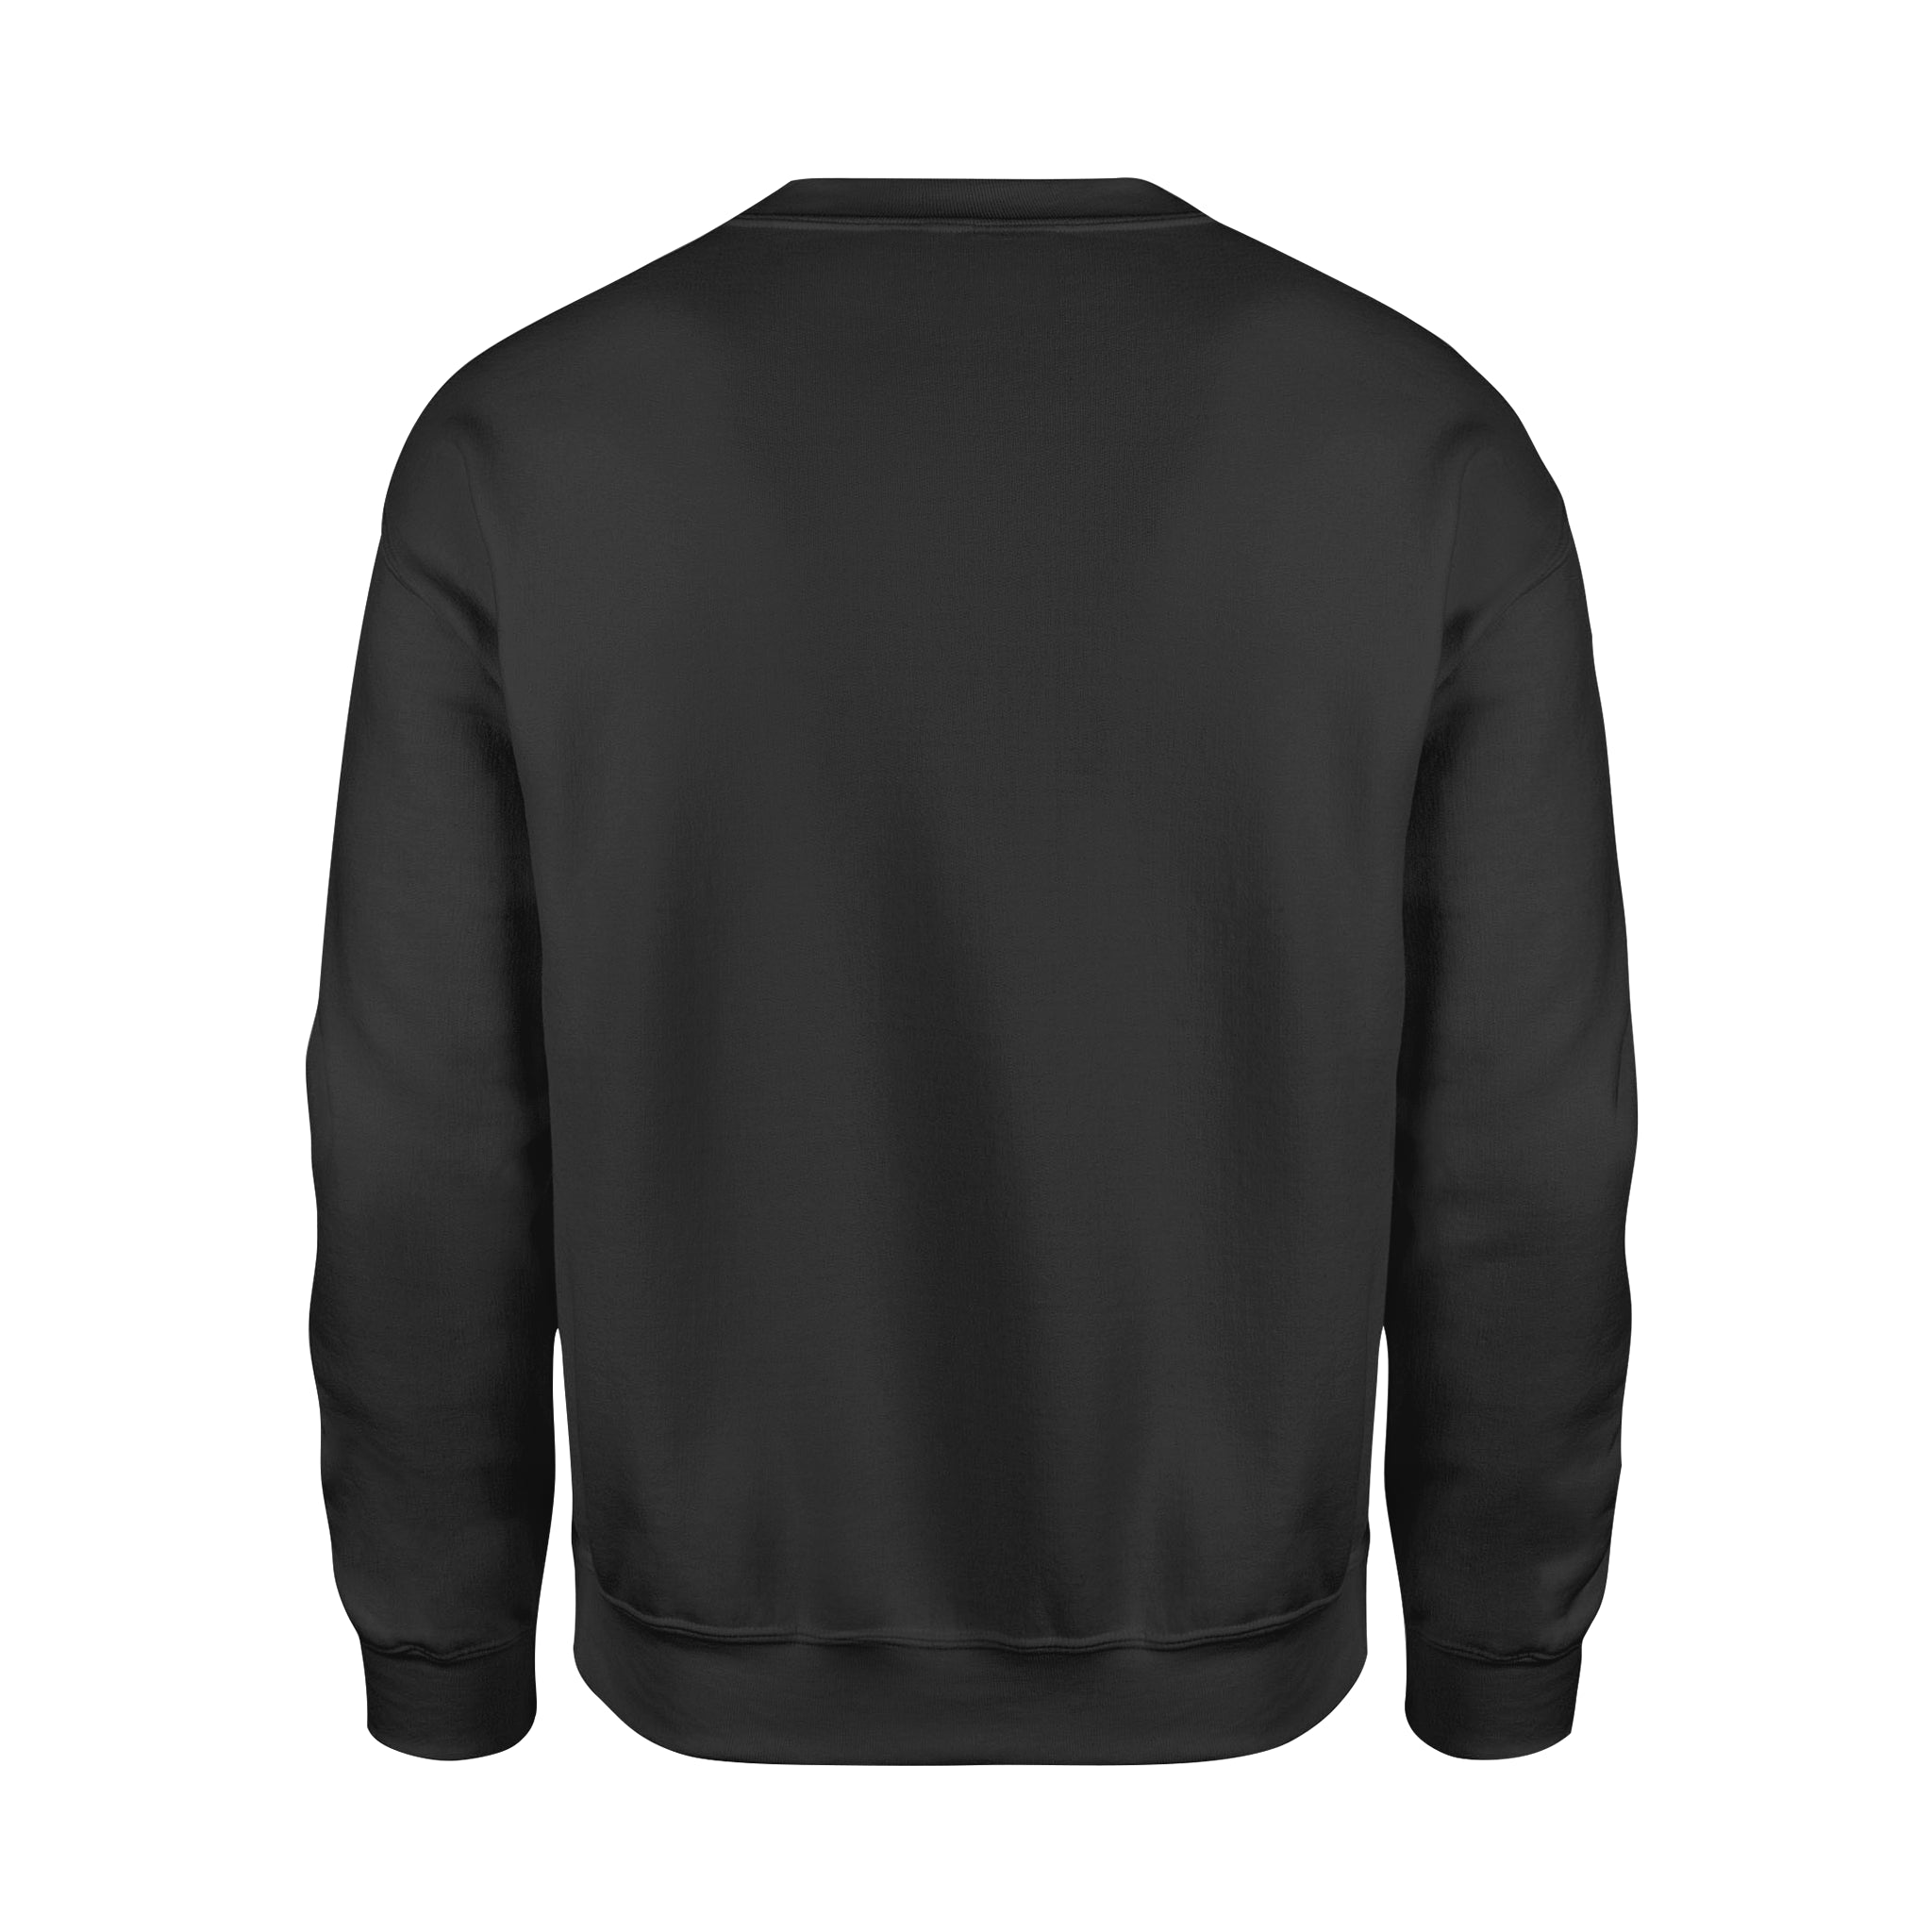 Glitchy Skull - Premium Fleece Sweatshirt